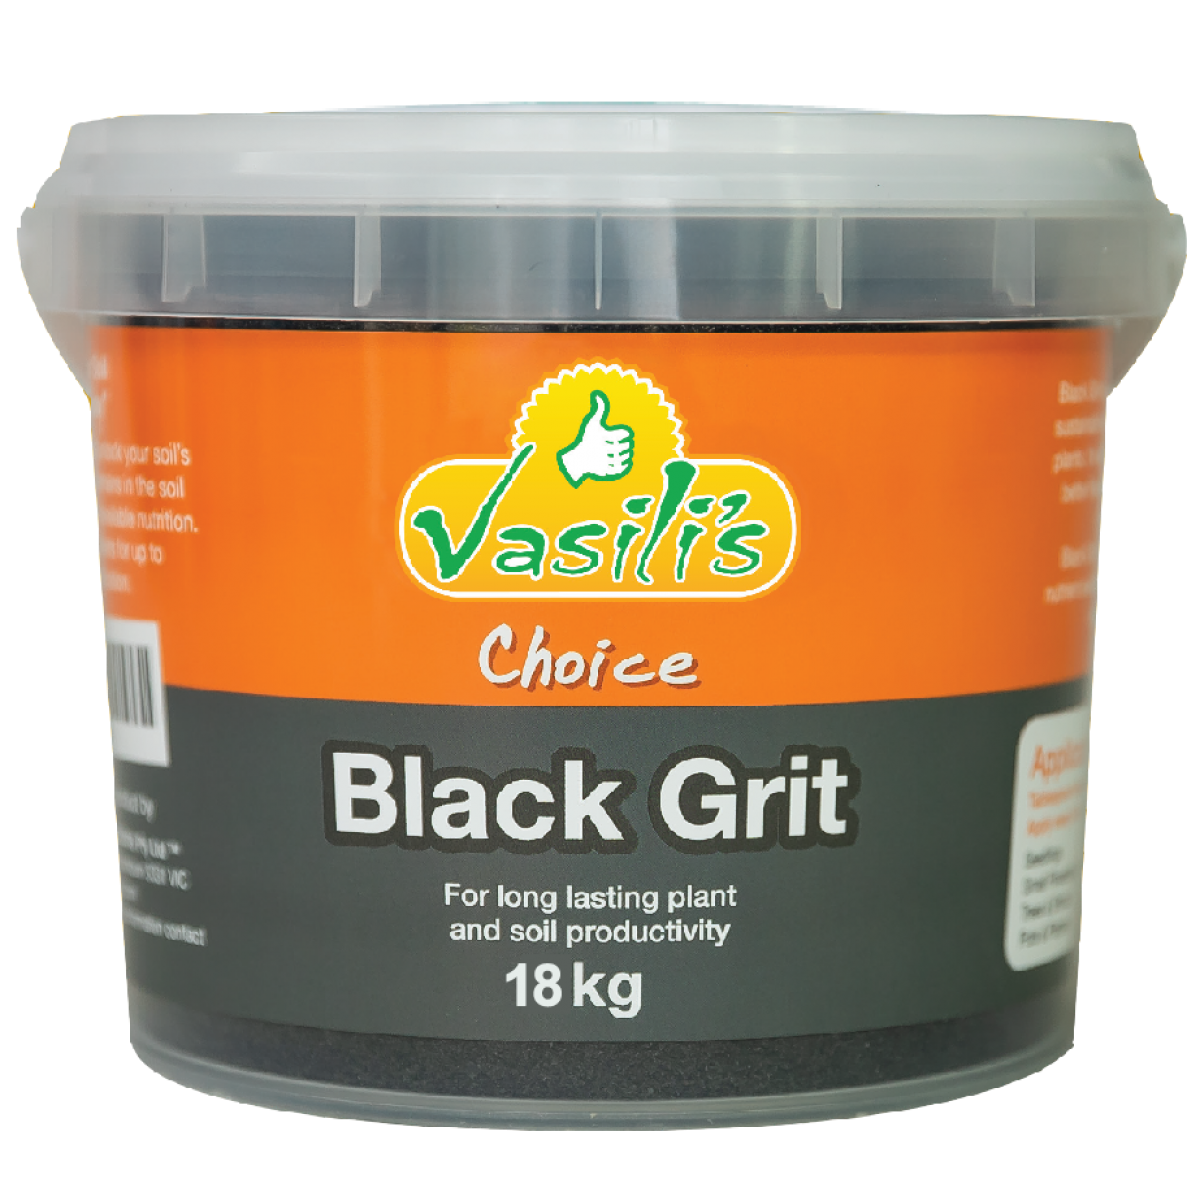 Vasili's Black Grit 18 kg Miscellaneous  